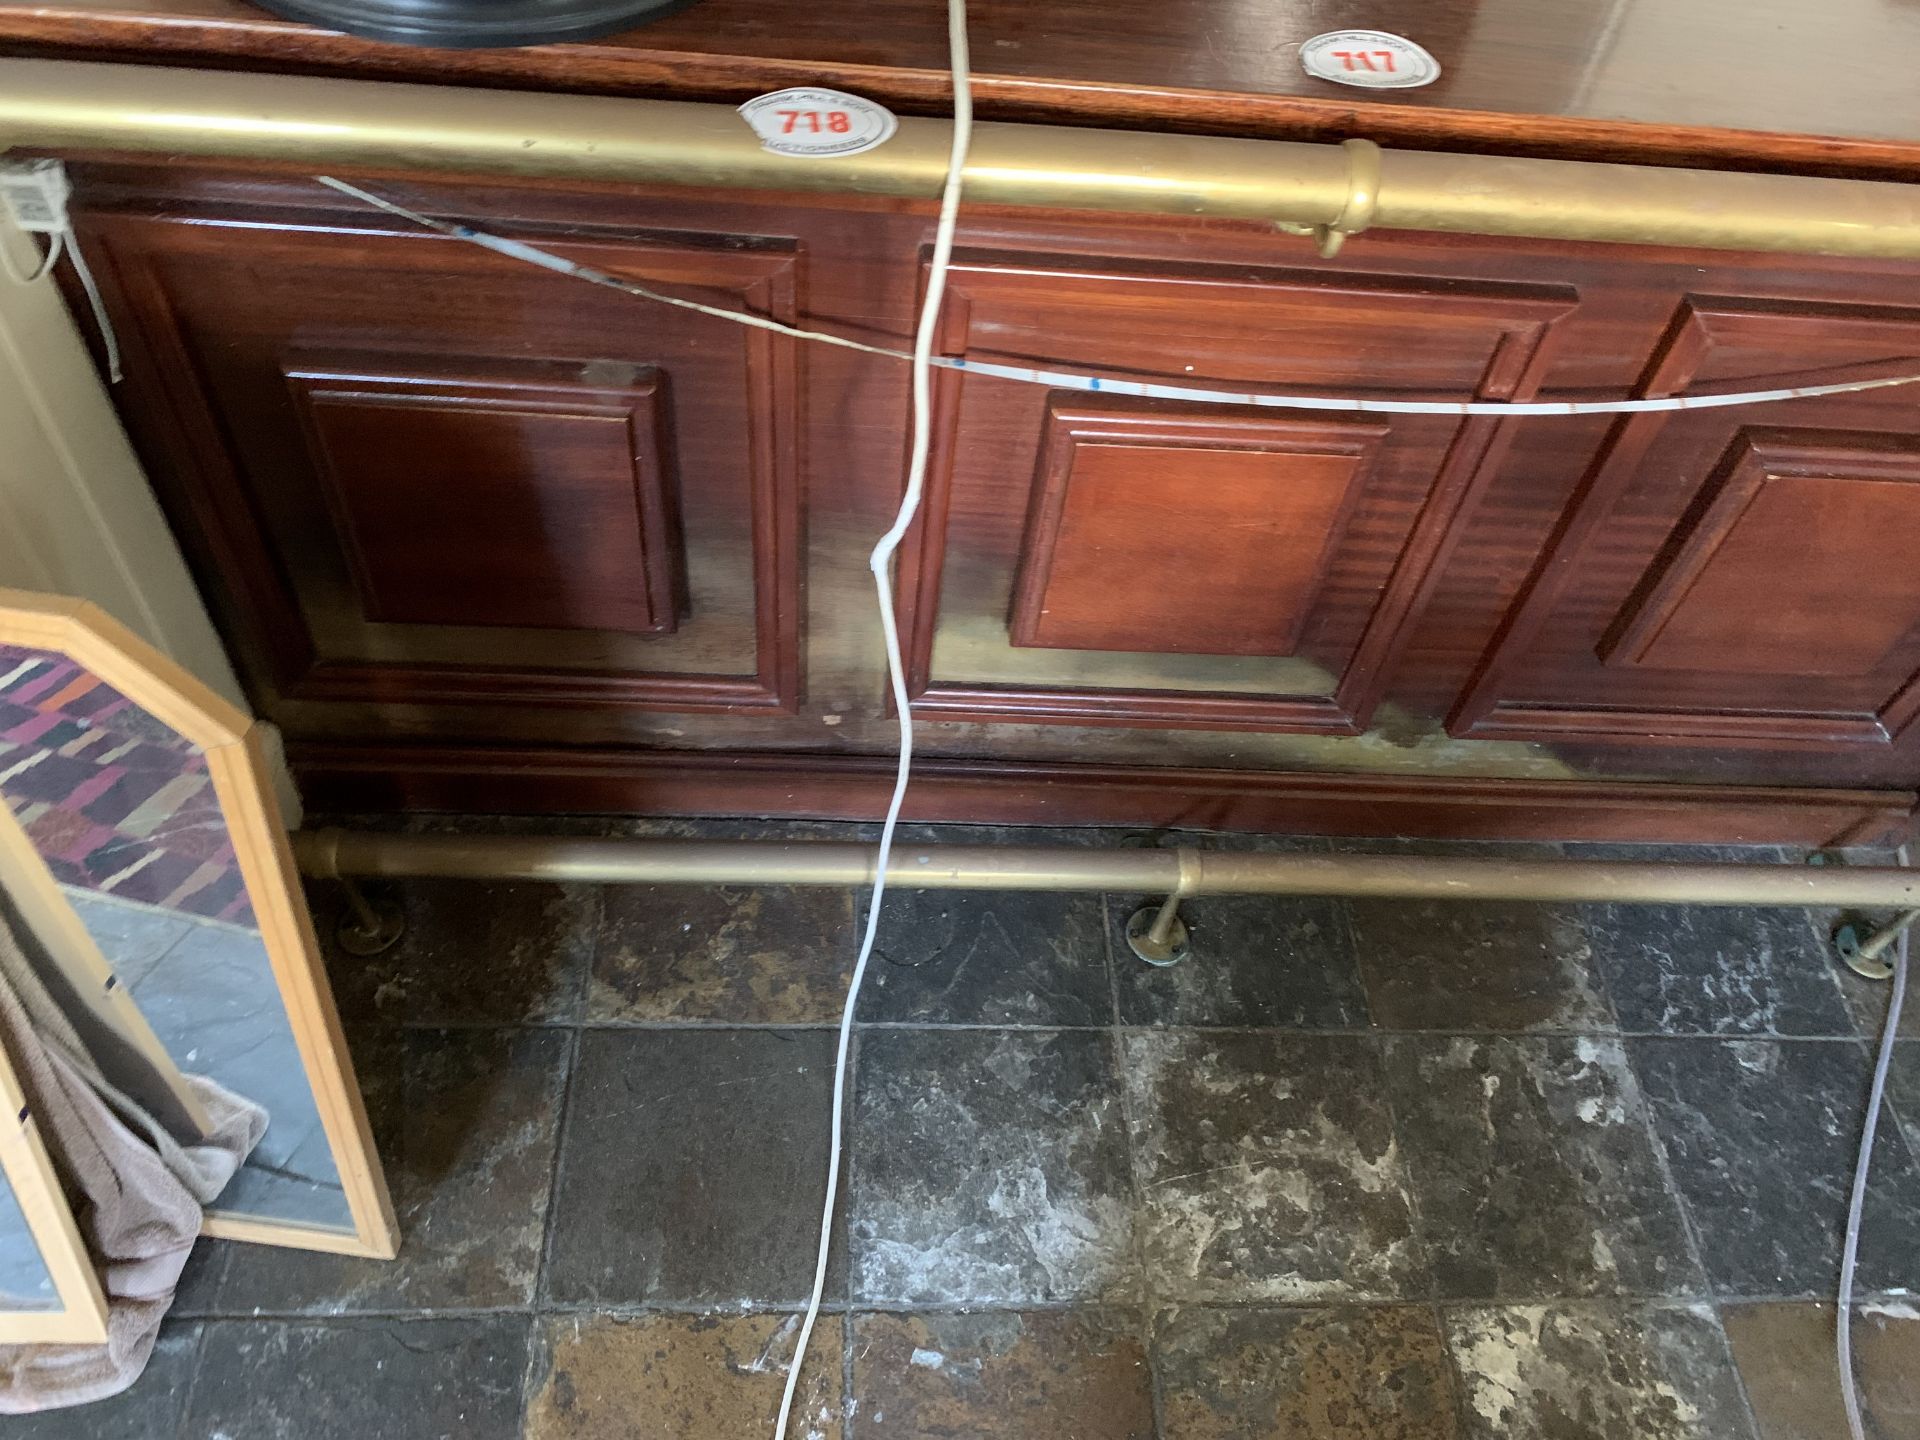 Brass bar & floor rails - purchaser to remove